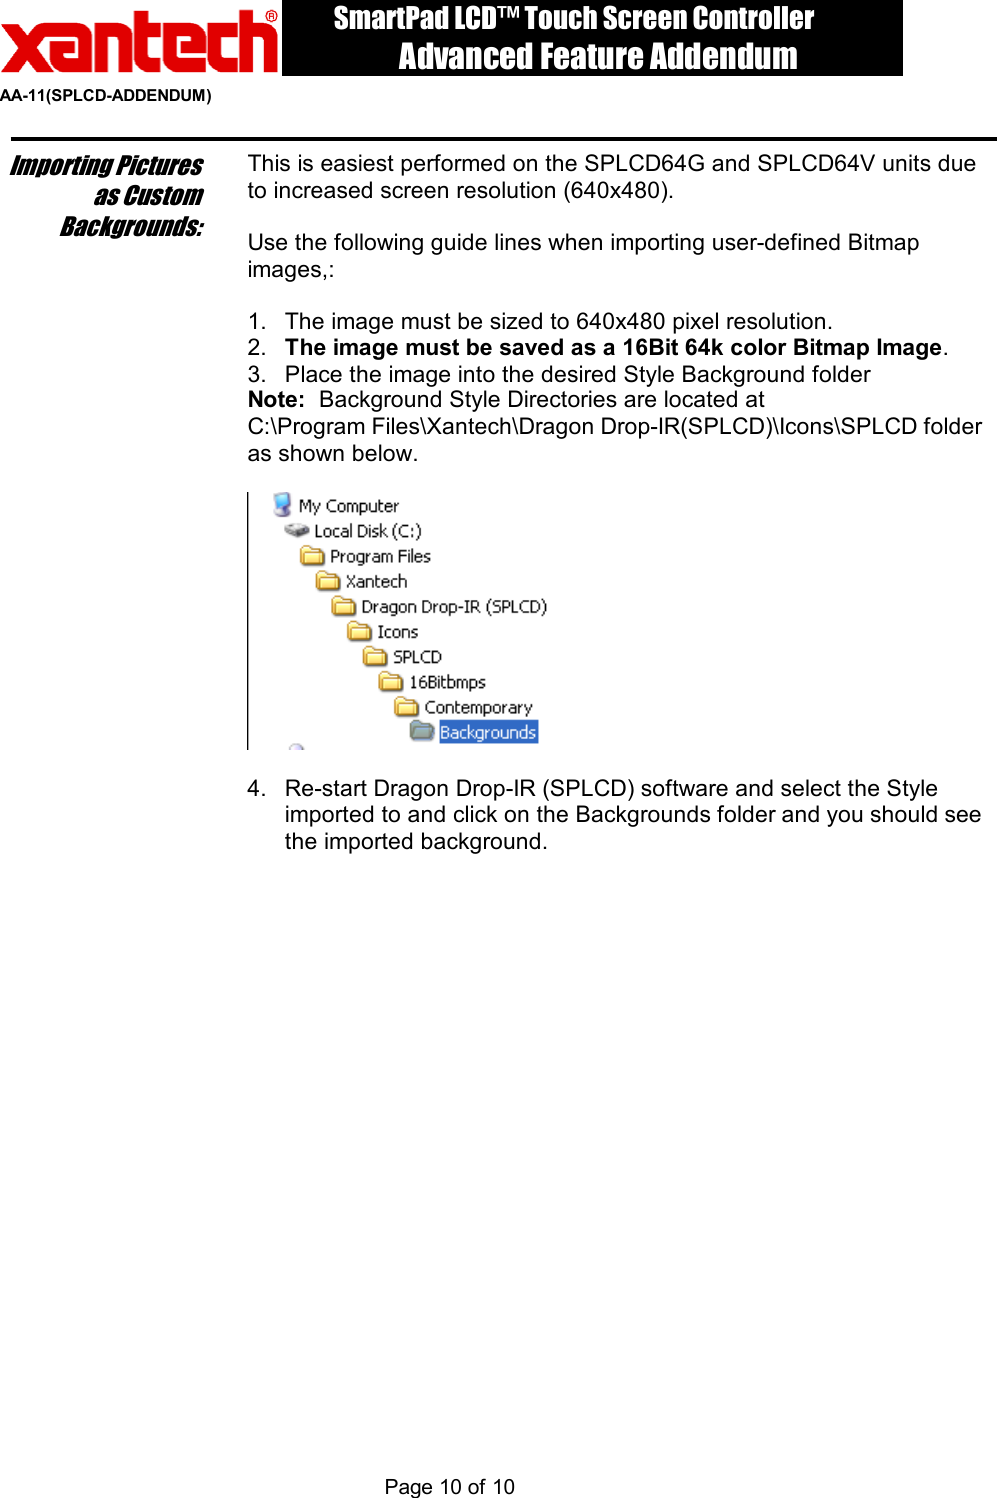 Page 10 of 10 - 18 A Aa11-Splcd-Adv-Prgm-Addendum-R2 - SPLCD-ADV-PRGM-ADDENDUM-R2 User Manual